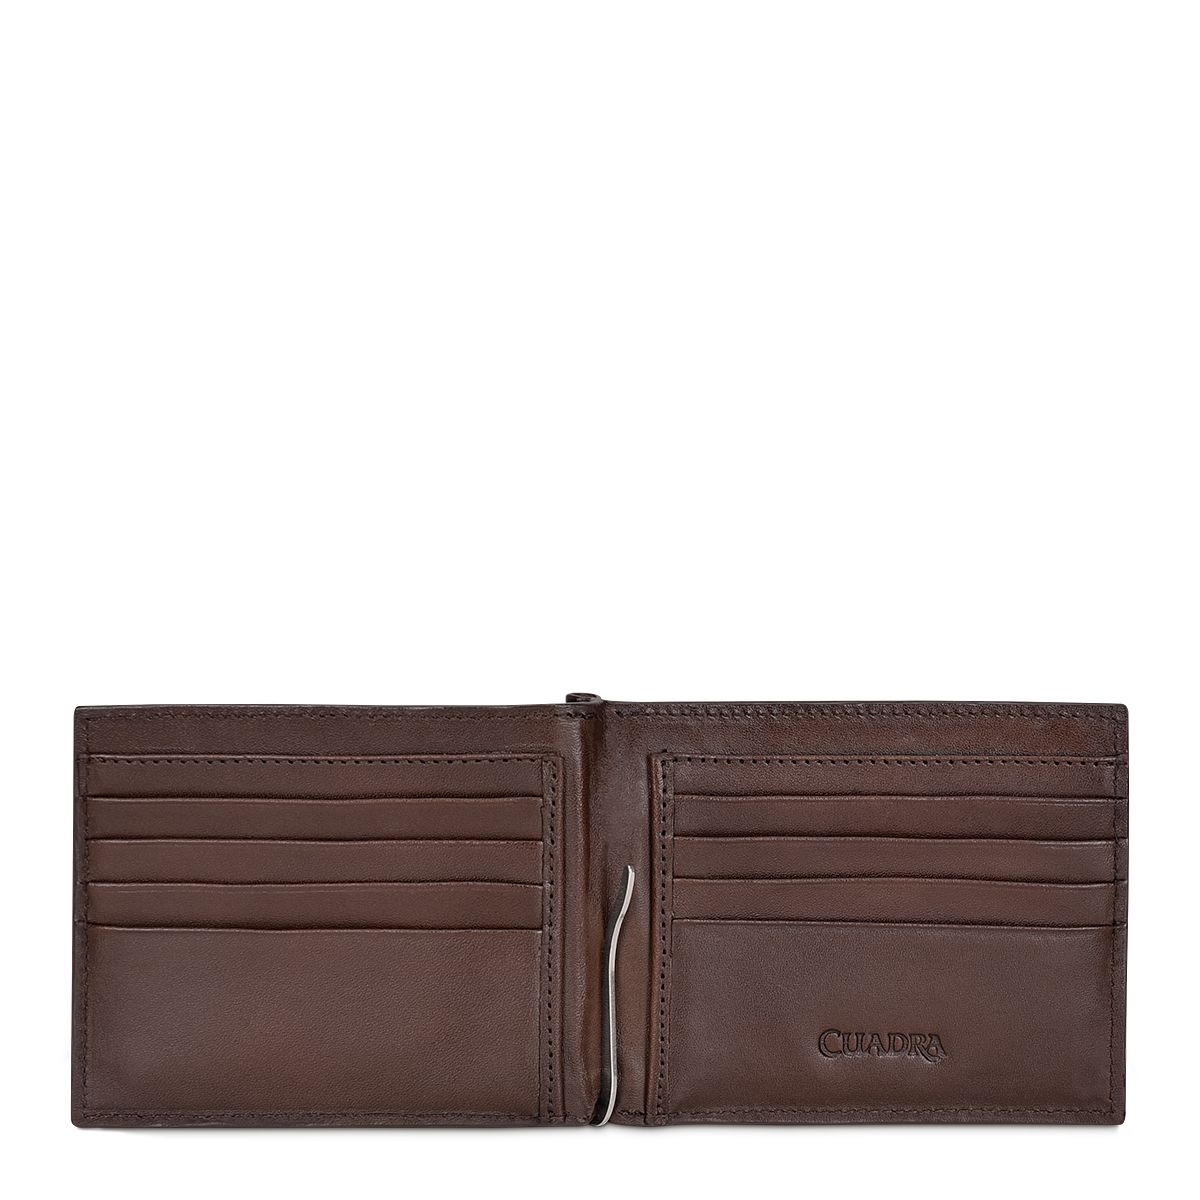 B3043FL - Cuadra brown casual fashion leather bi fold wallet for men-Kuet.us